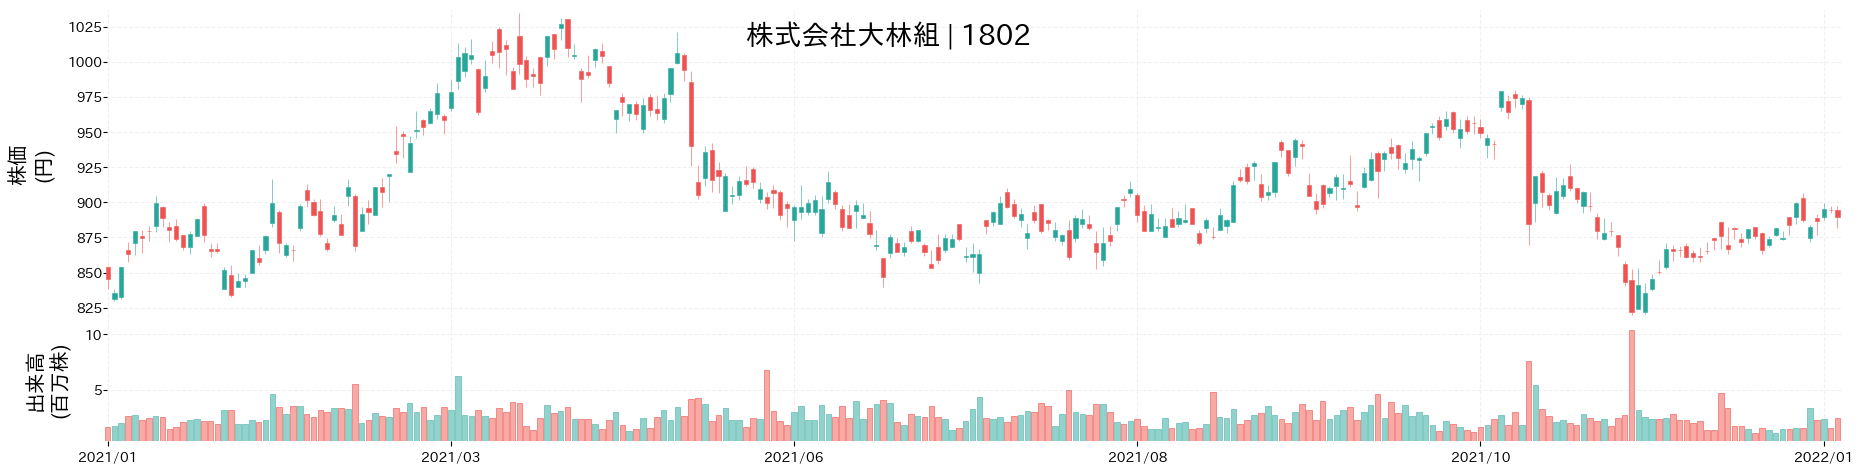 大林組の株価推移(2021)